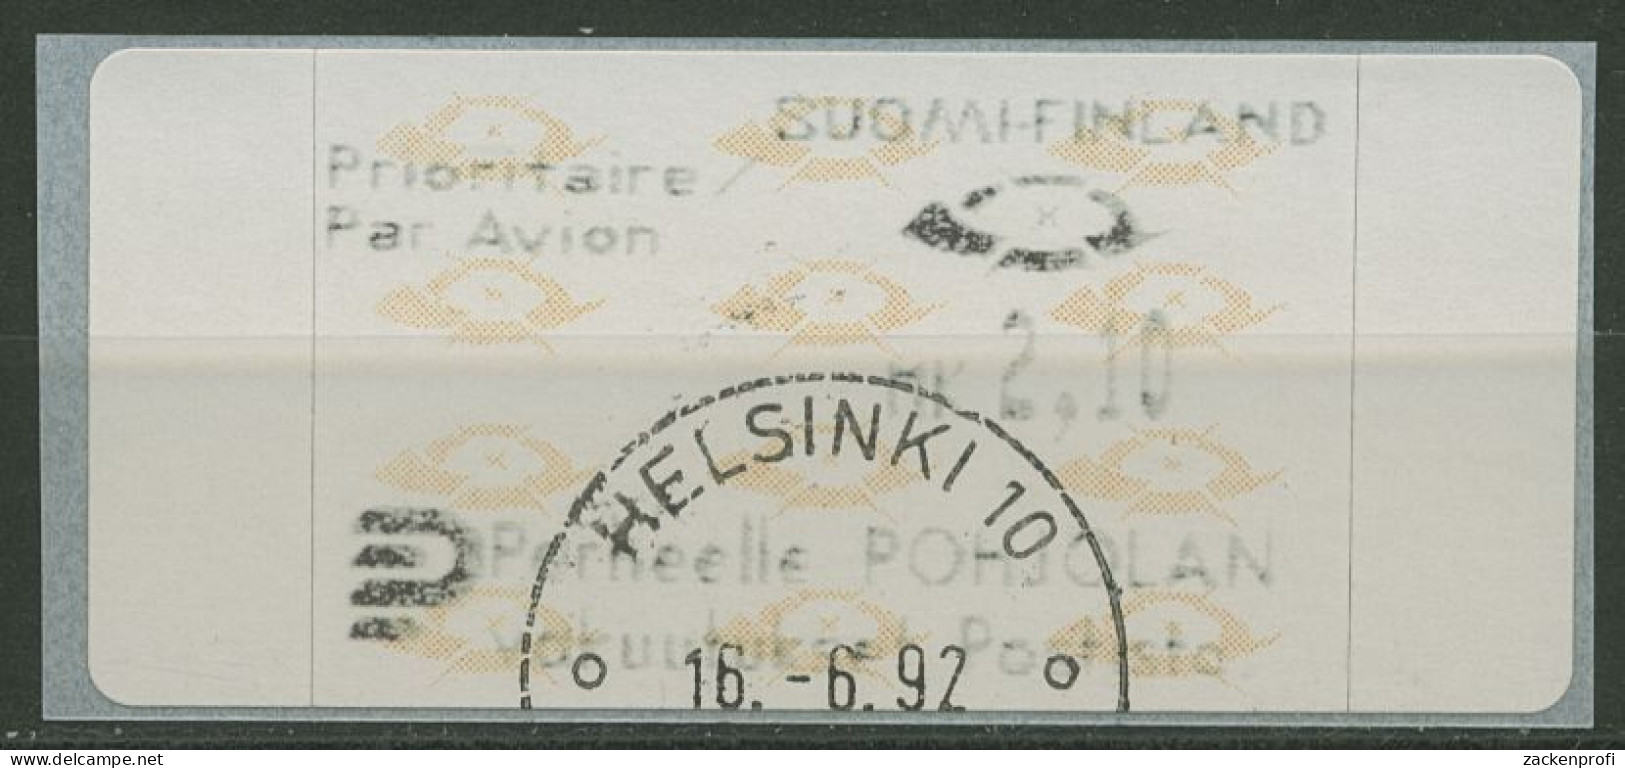 Finnland Automatenmarken 1992 Posthörner Einzelwert ATM 12.3 Z6 Gestempelt - Automaatzegels [ATM]